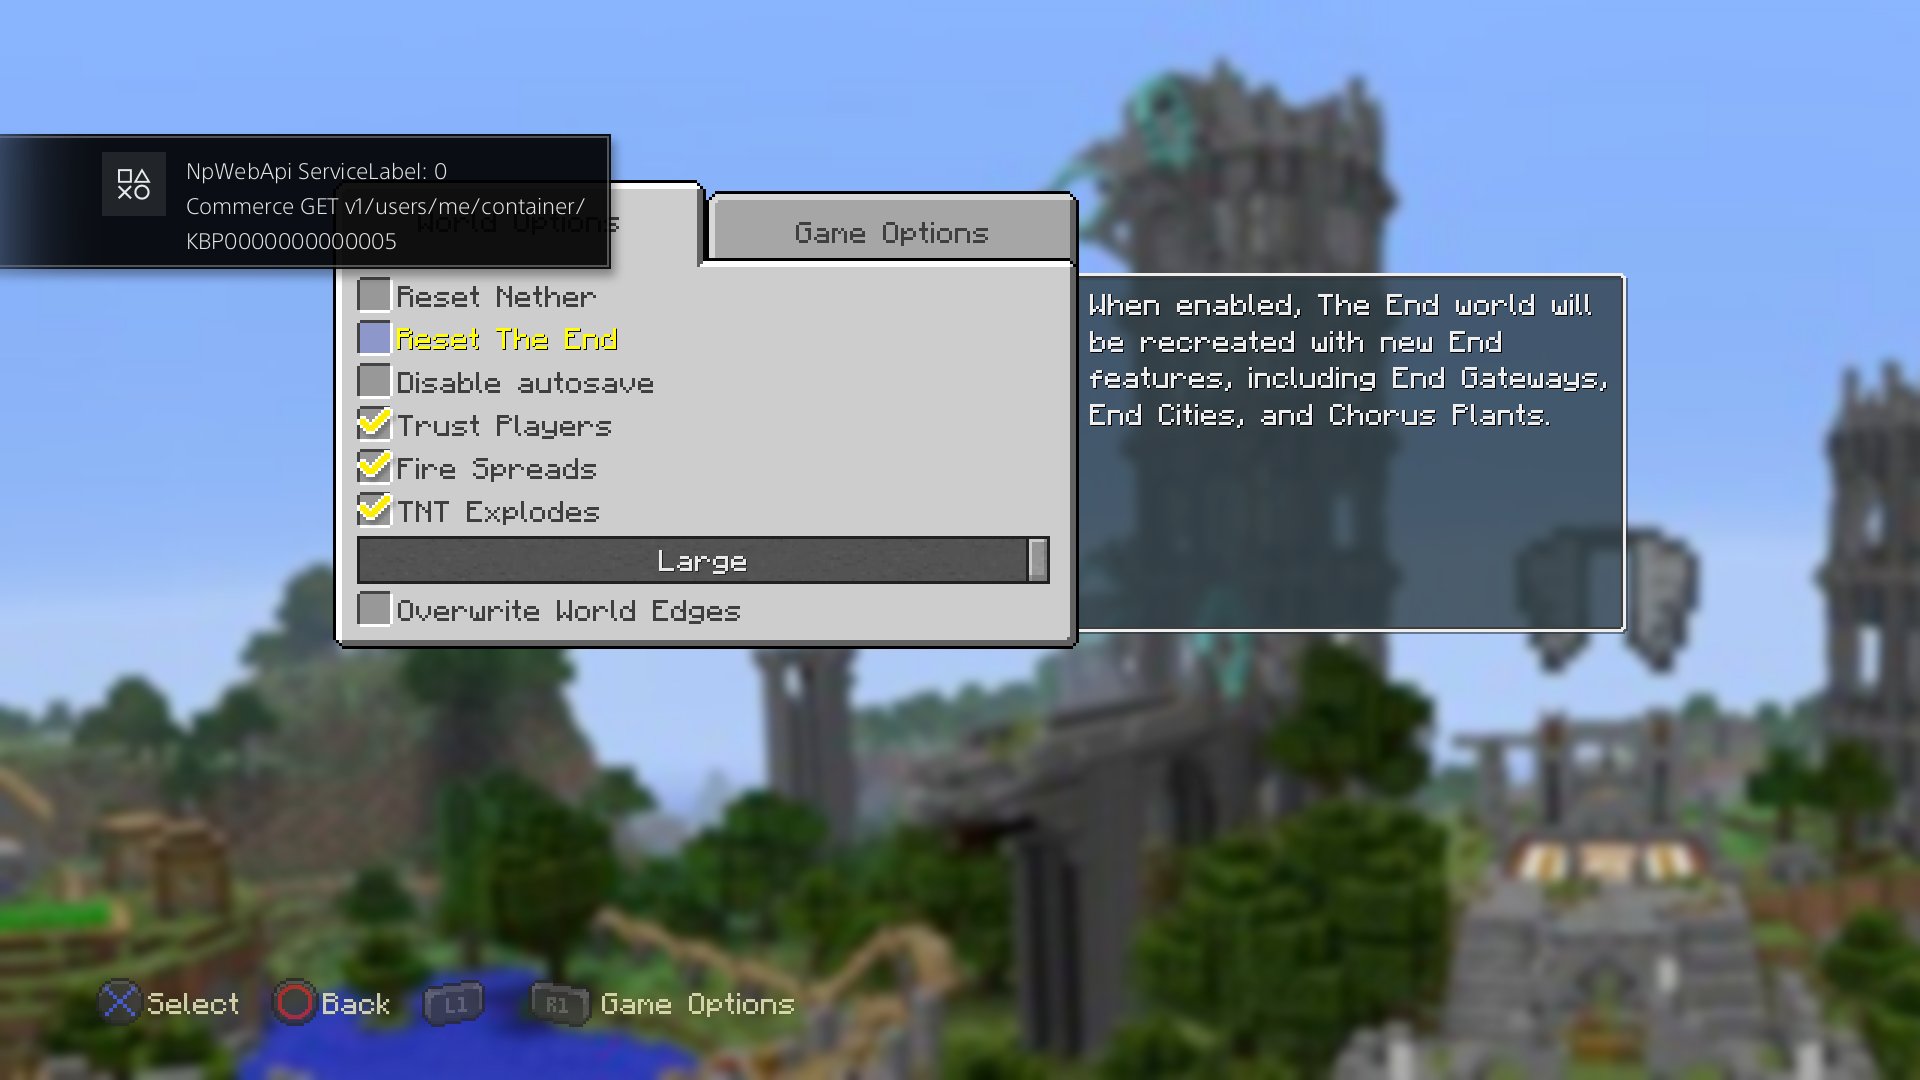 Minecraft: PlayStation 4 Edition update – PlayStation.Blog